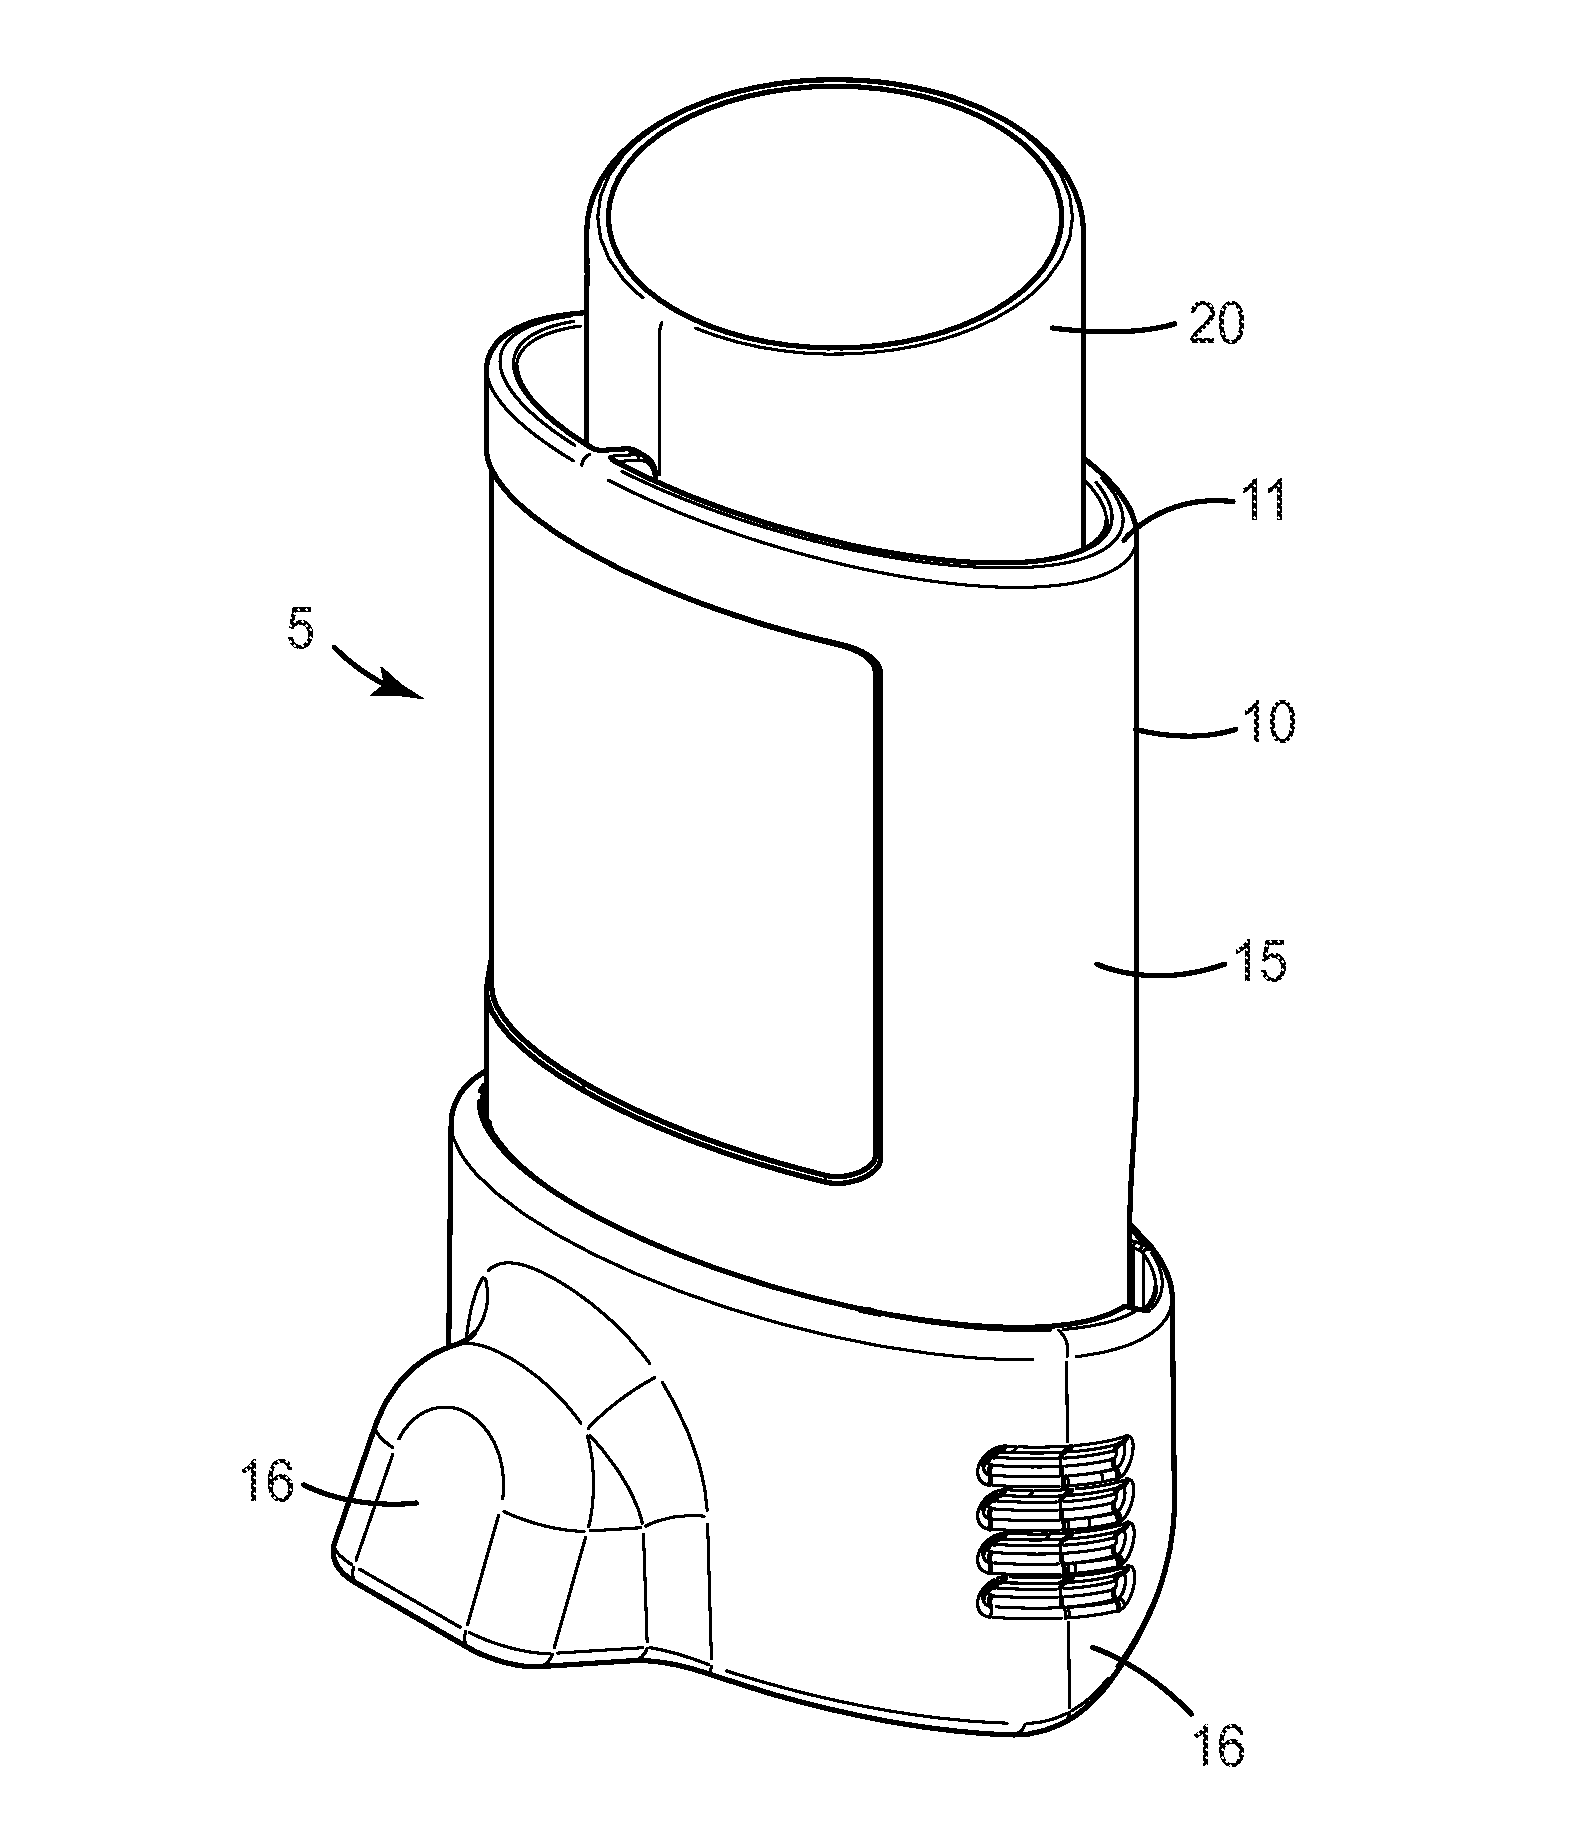 Actuator for an inhaler